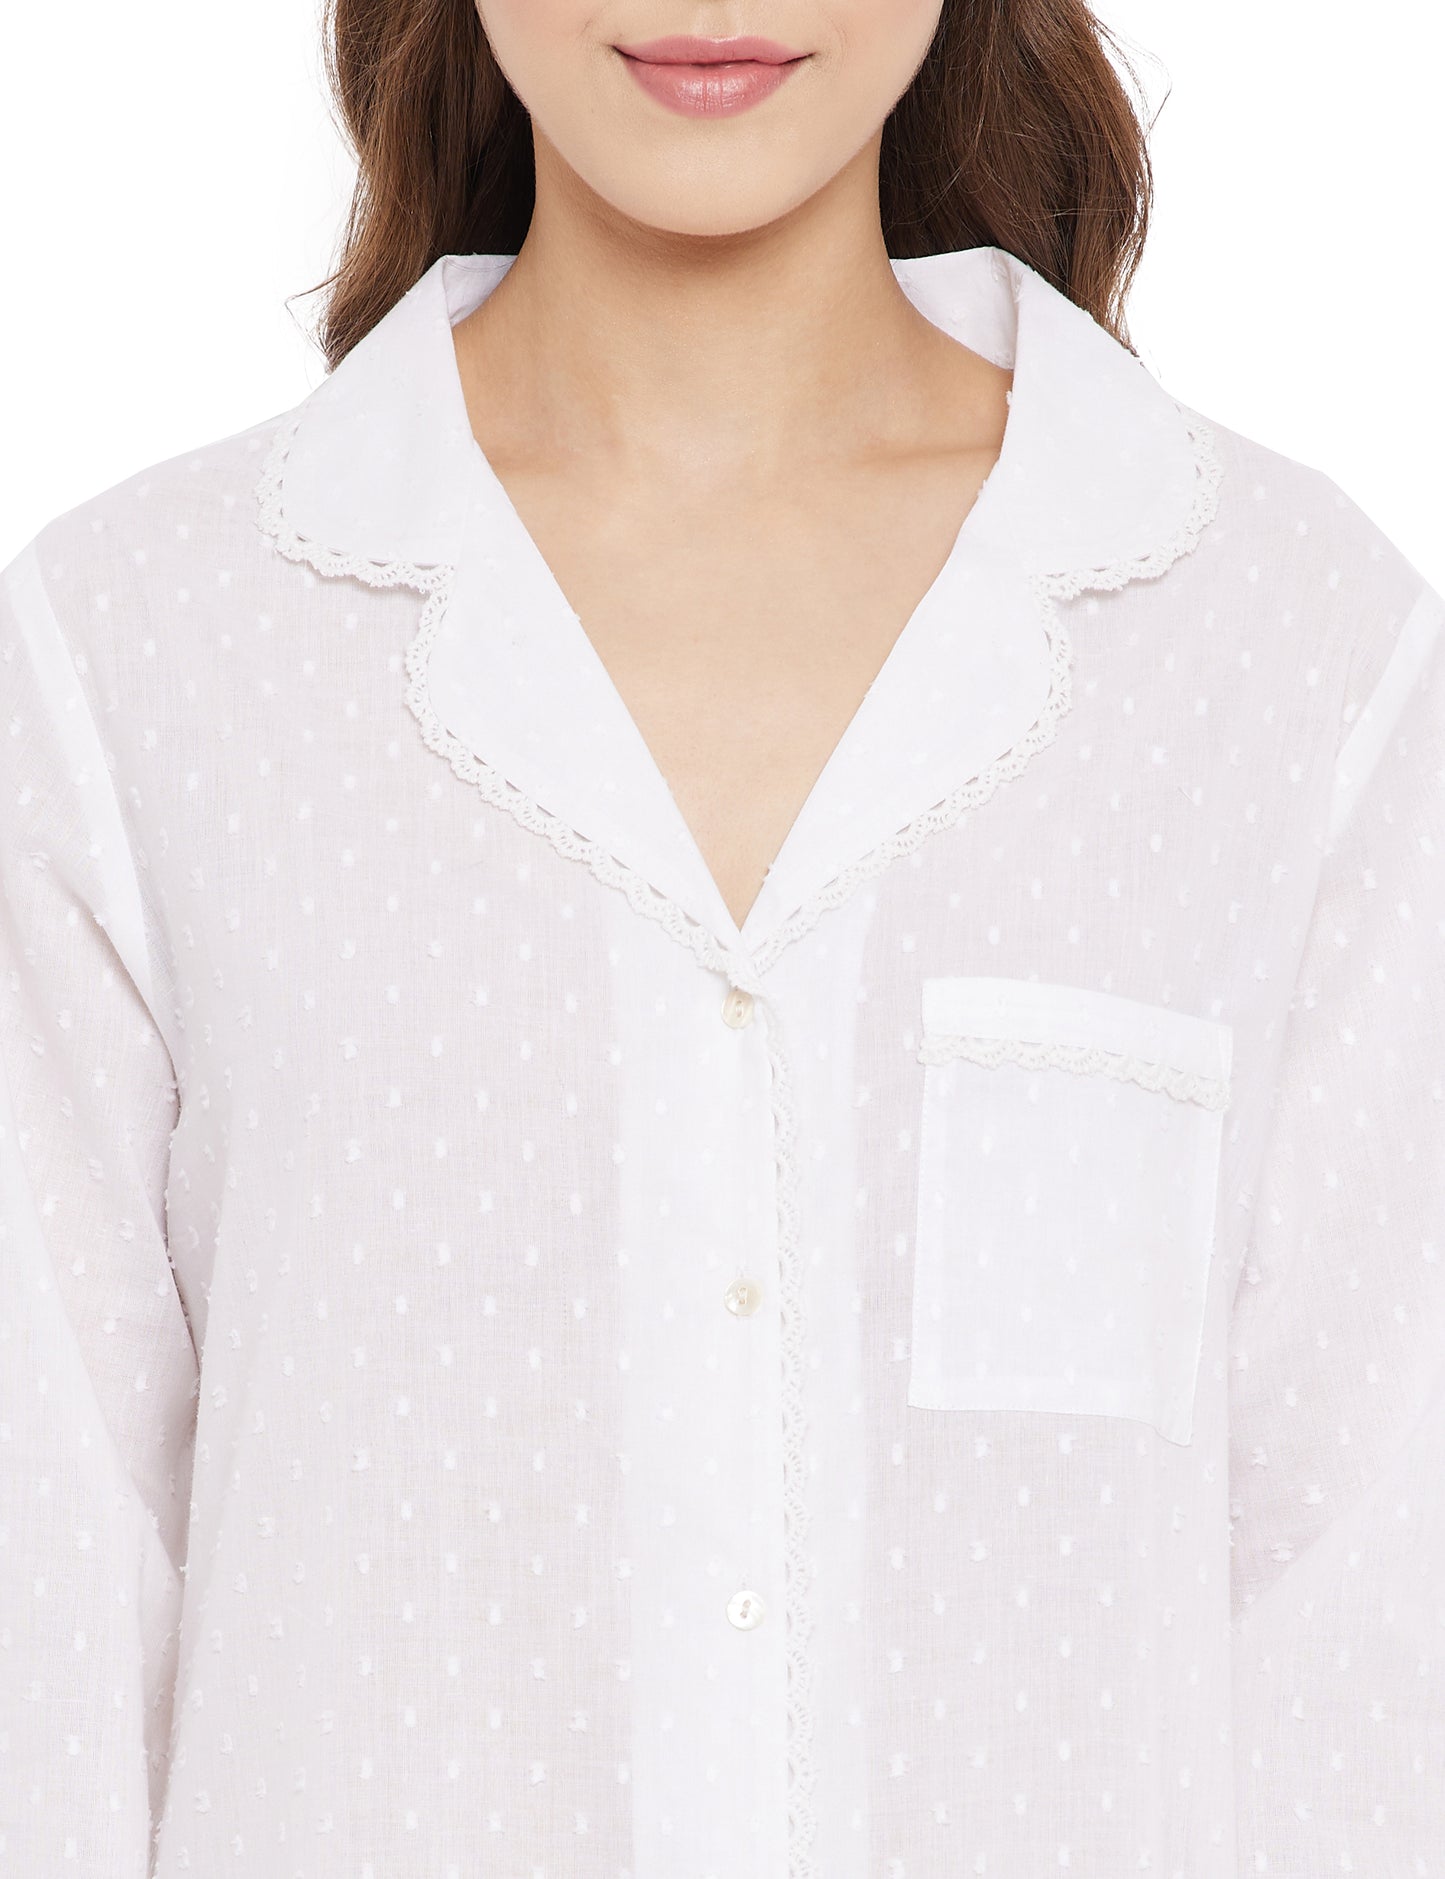 Ivy Cotton Lace Night Shirt  26.99 Indigo Paisley